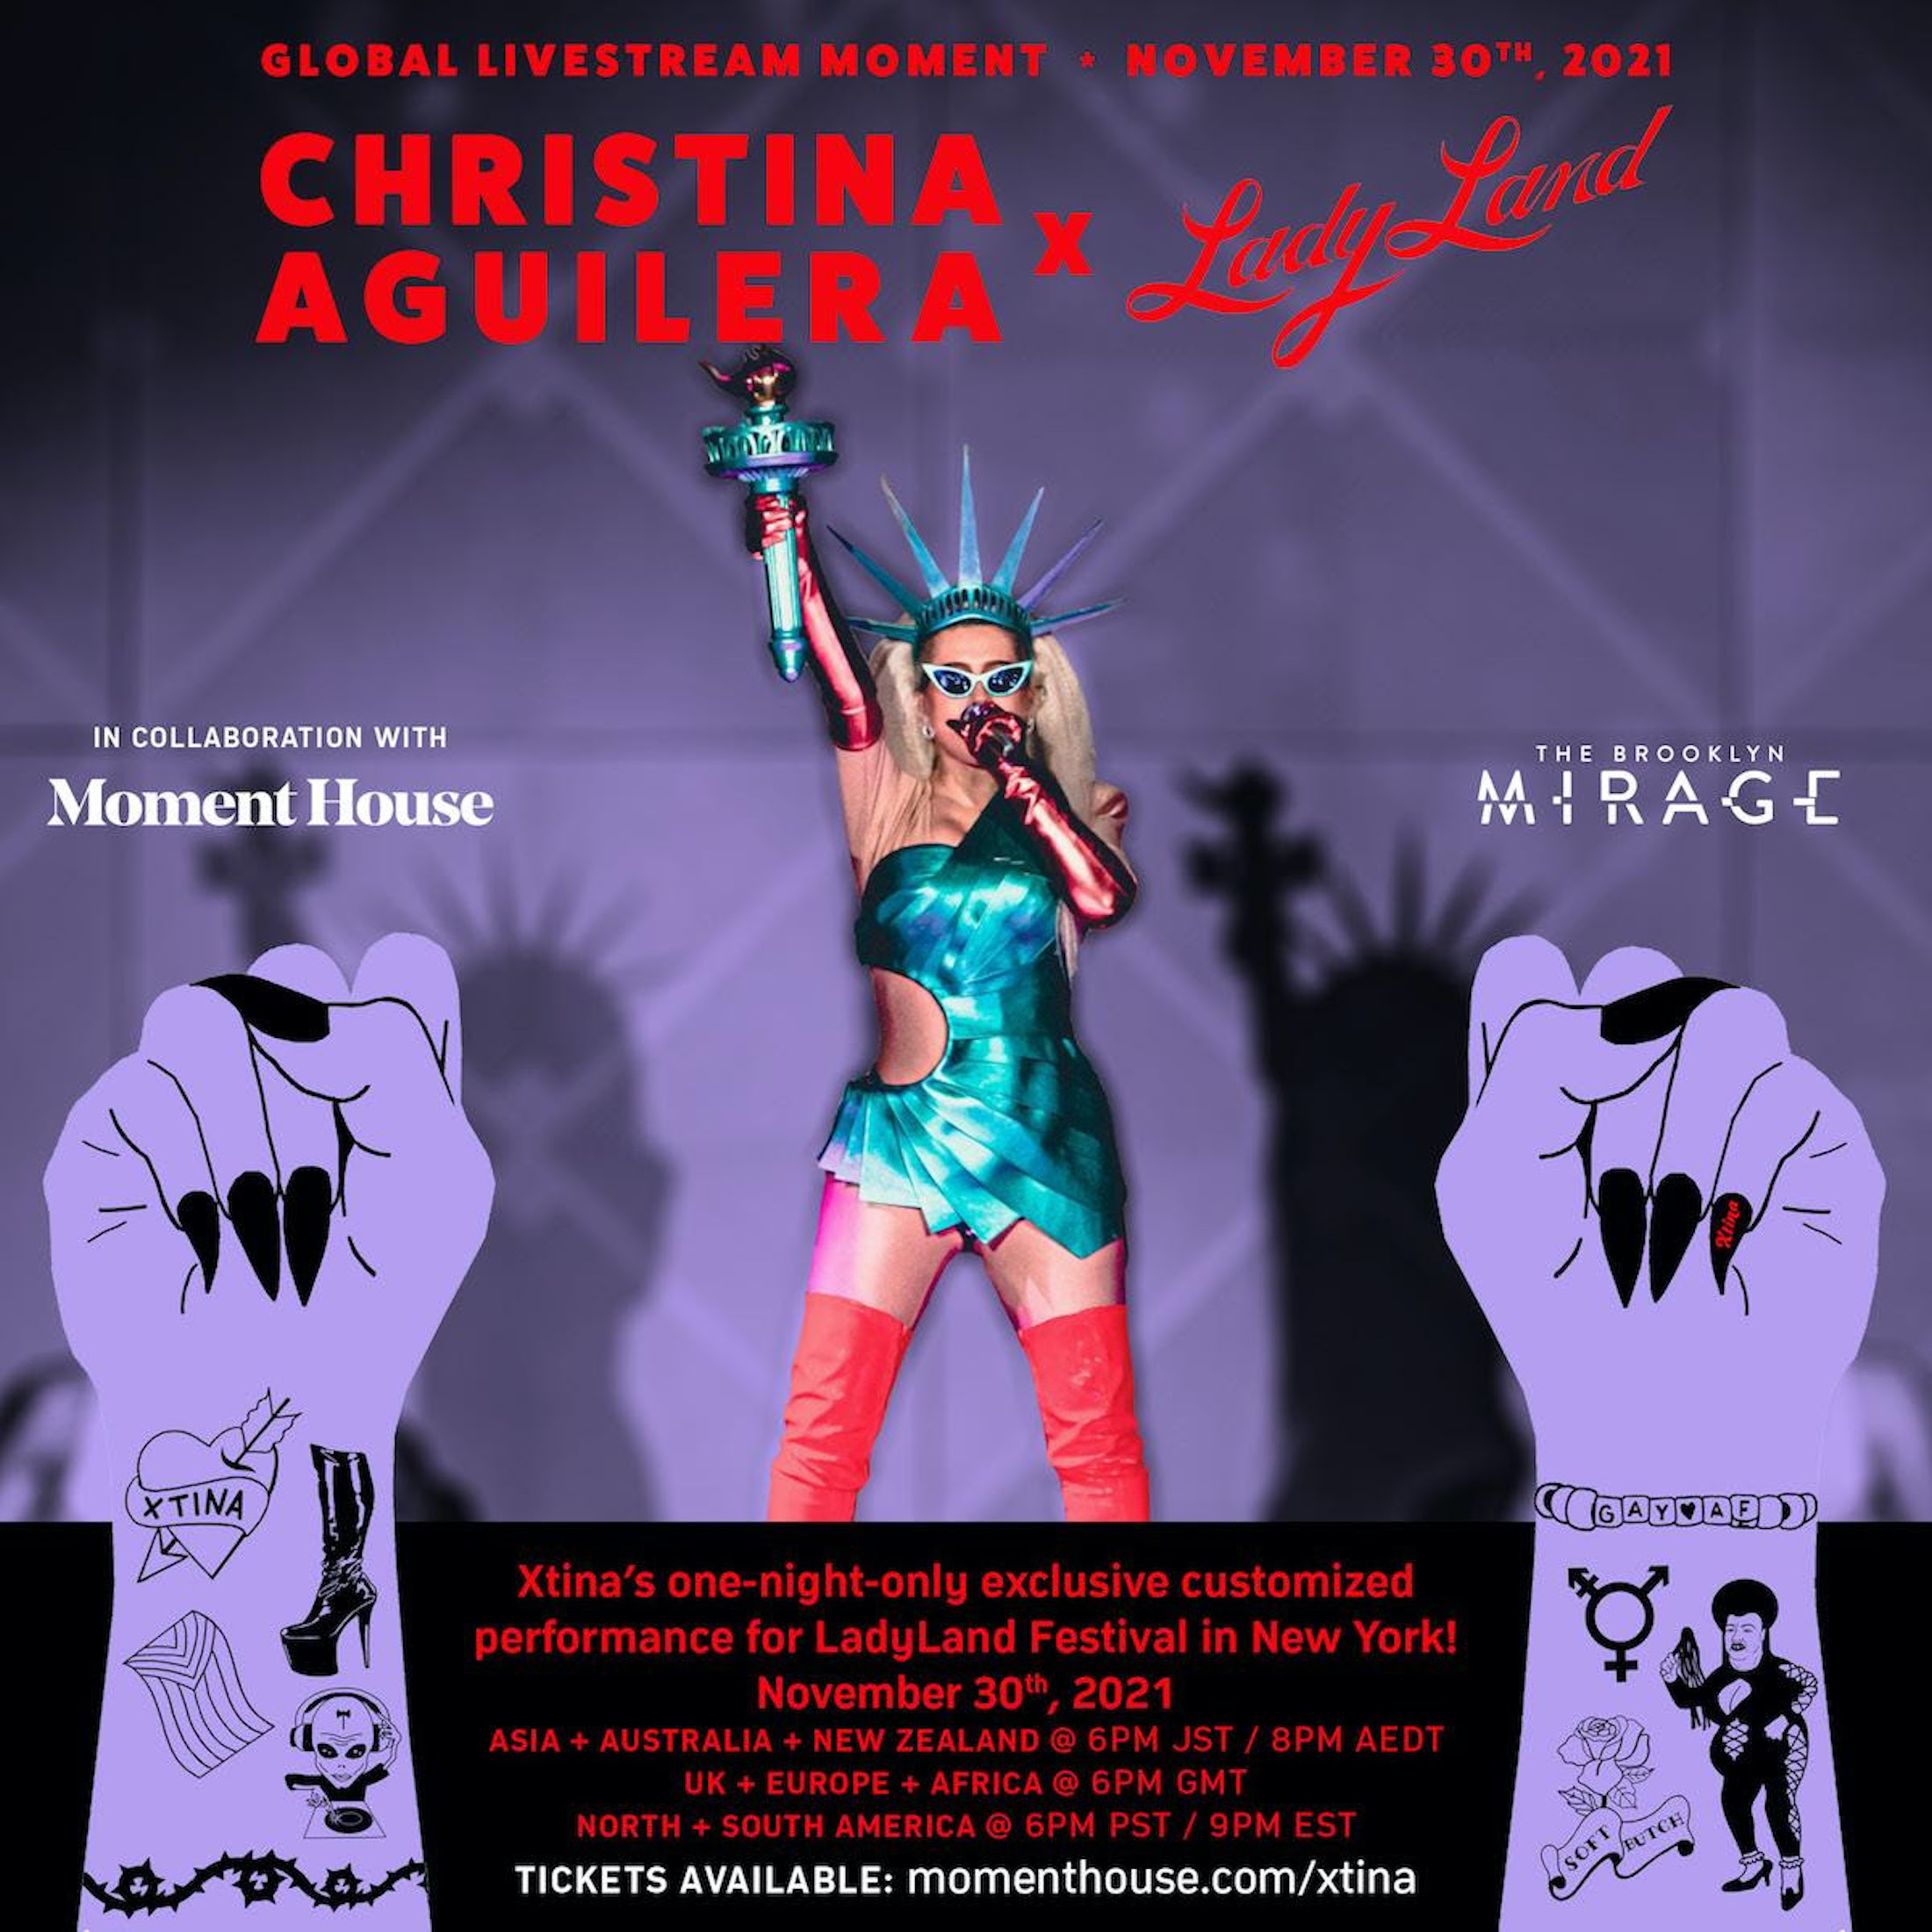 CHRISTINA AGUILERA’S LADYLAND 2021 HEADLINING PERFORMANCE TO STREAM 11/30/21